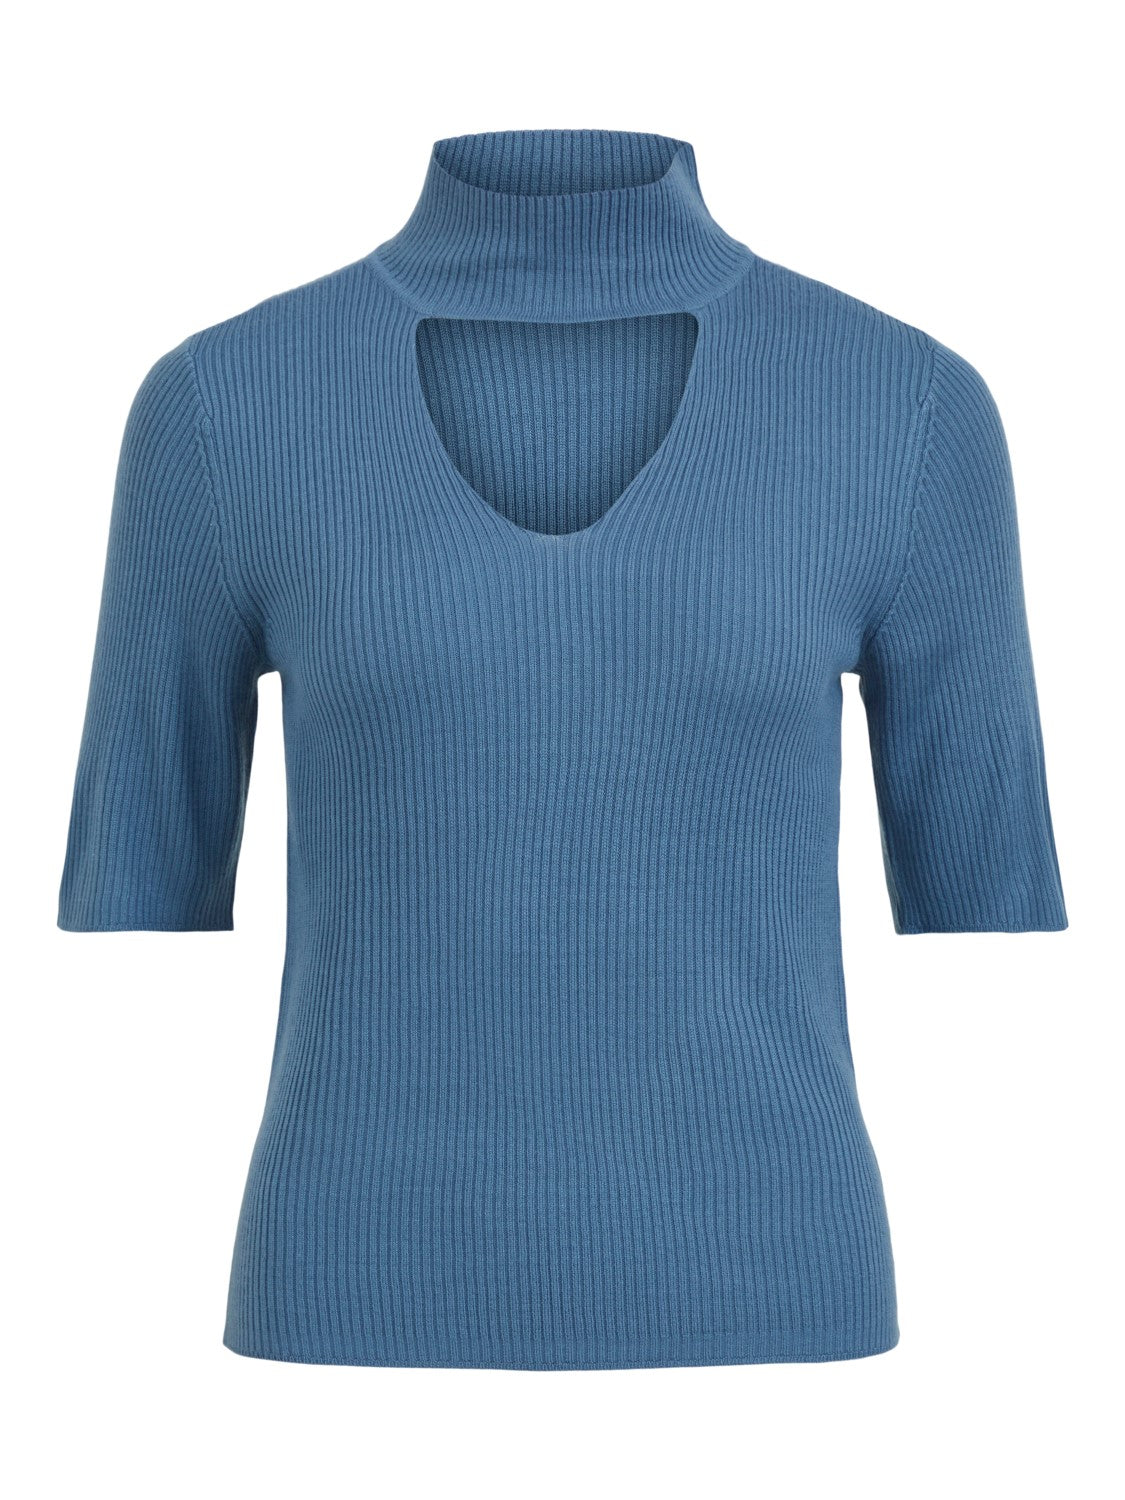 Vipopsa 2/4 Sleeve Knit Top (Blue)